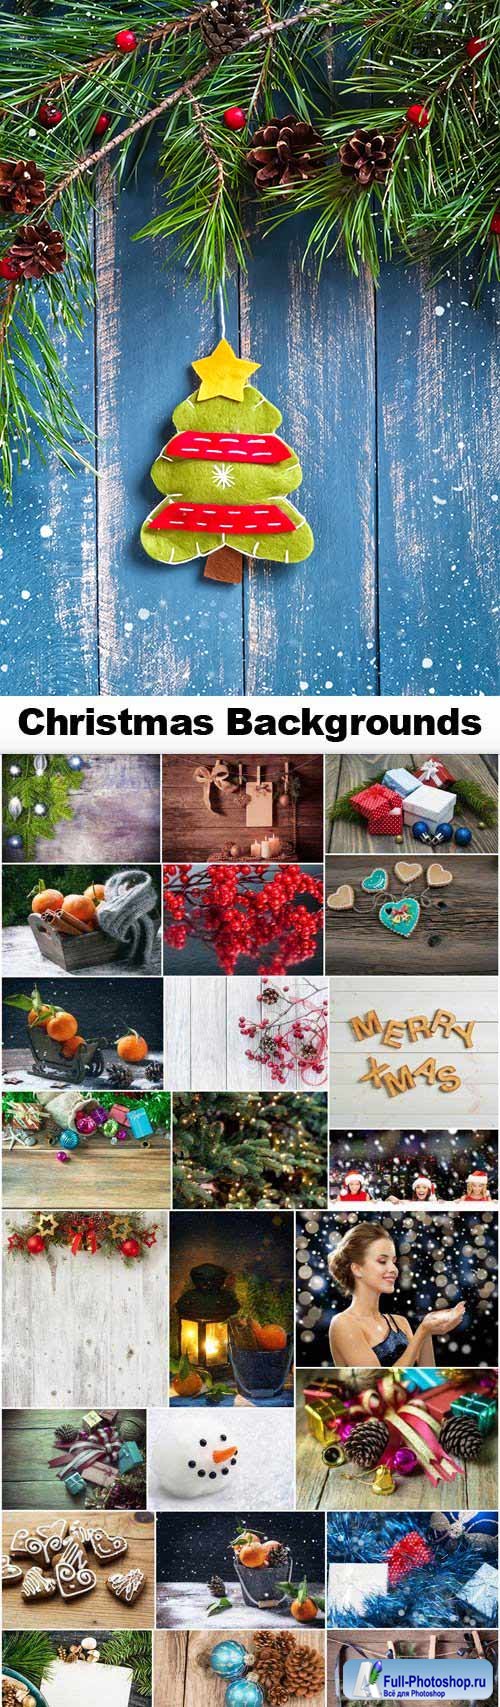 Merry Christmas Backgrounds 25xJPG